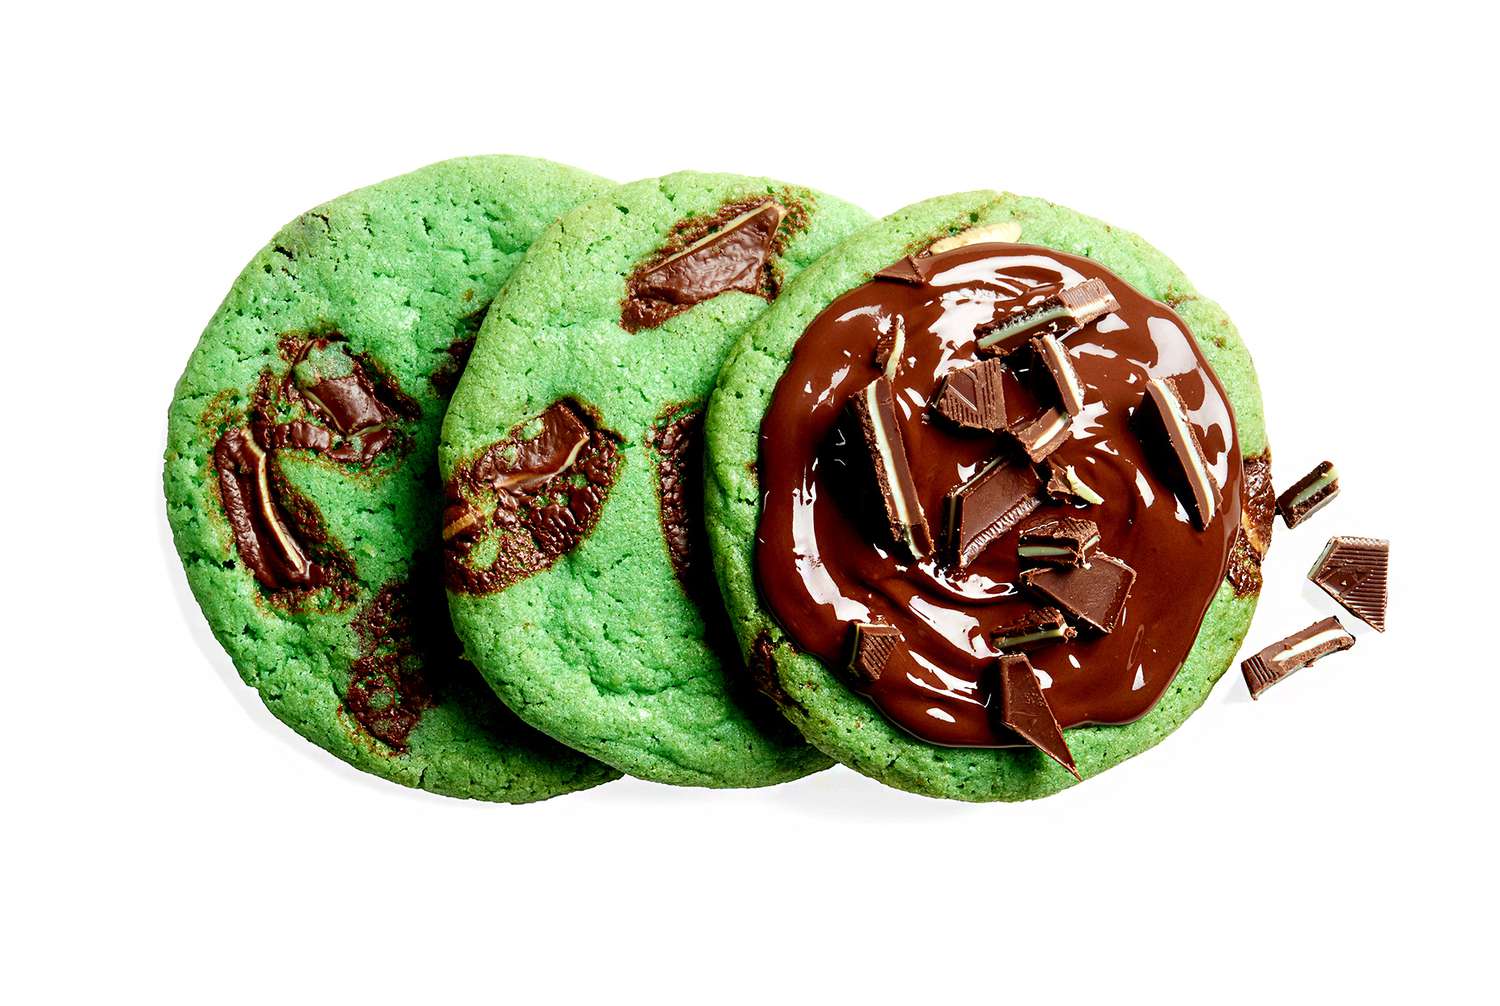 Giant Double-Mint Cookies